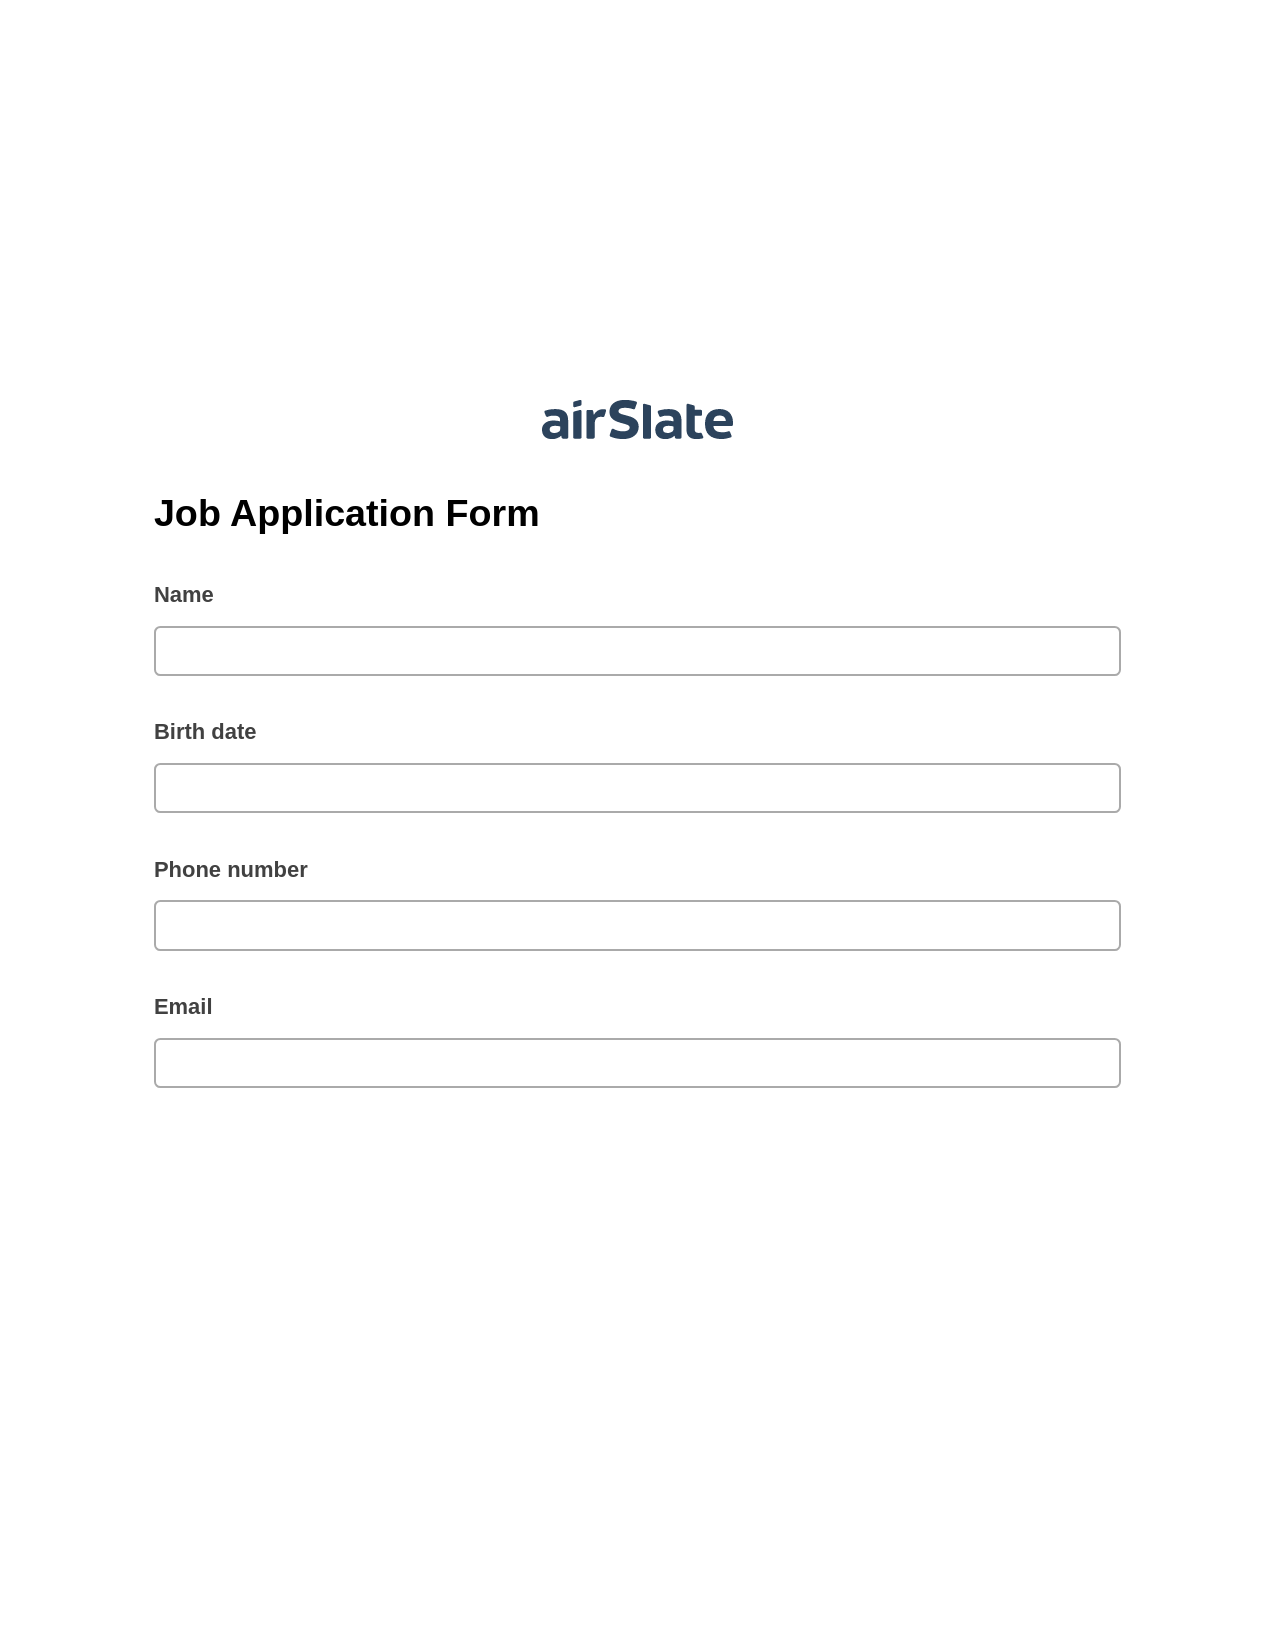 Multirole Job Application Form Pre-fill Slate from MS Dynamics 365 Records Bot, Create slate bot, Google Drive Bot